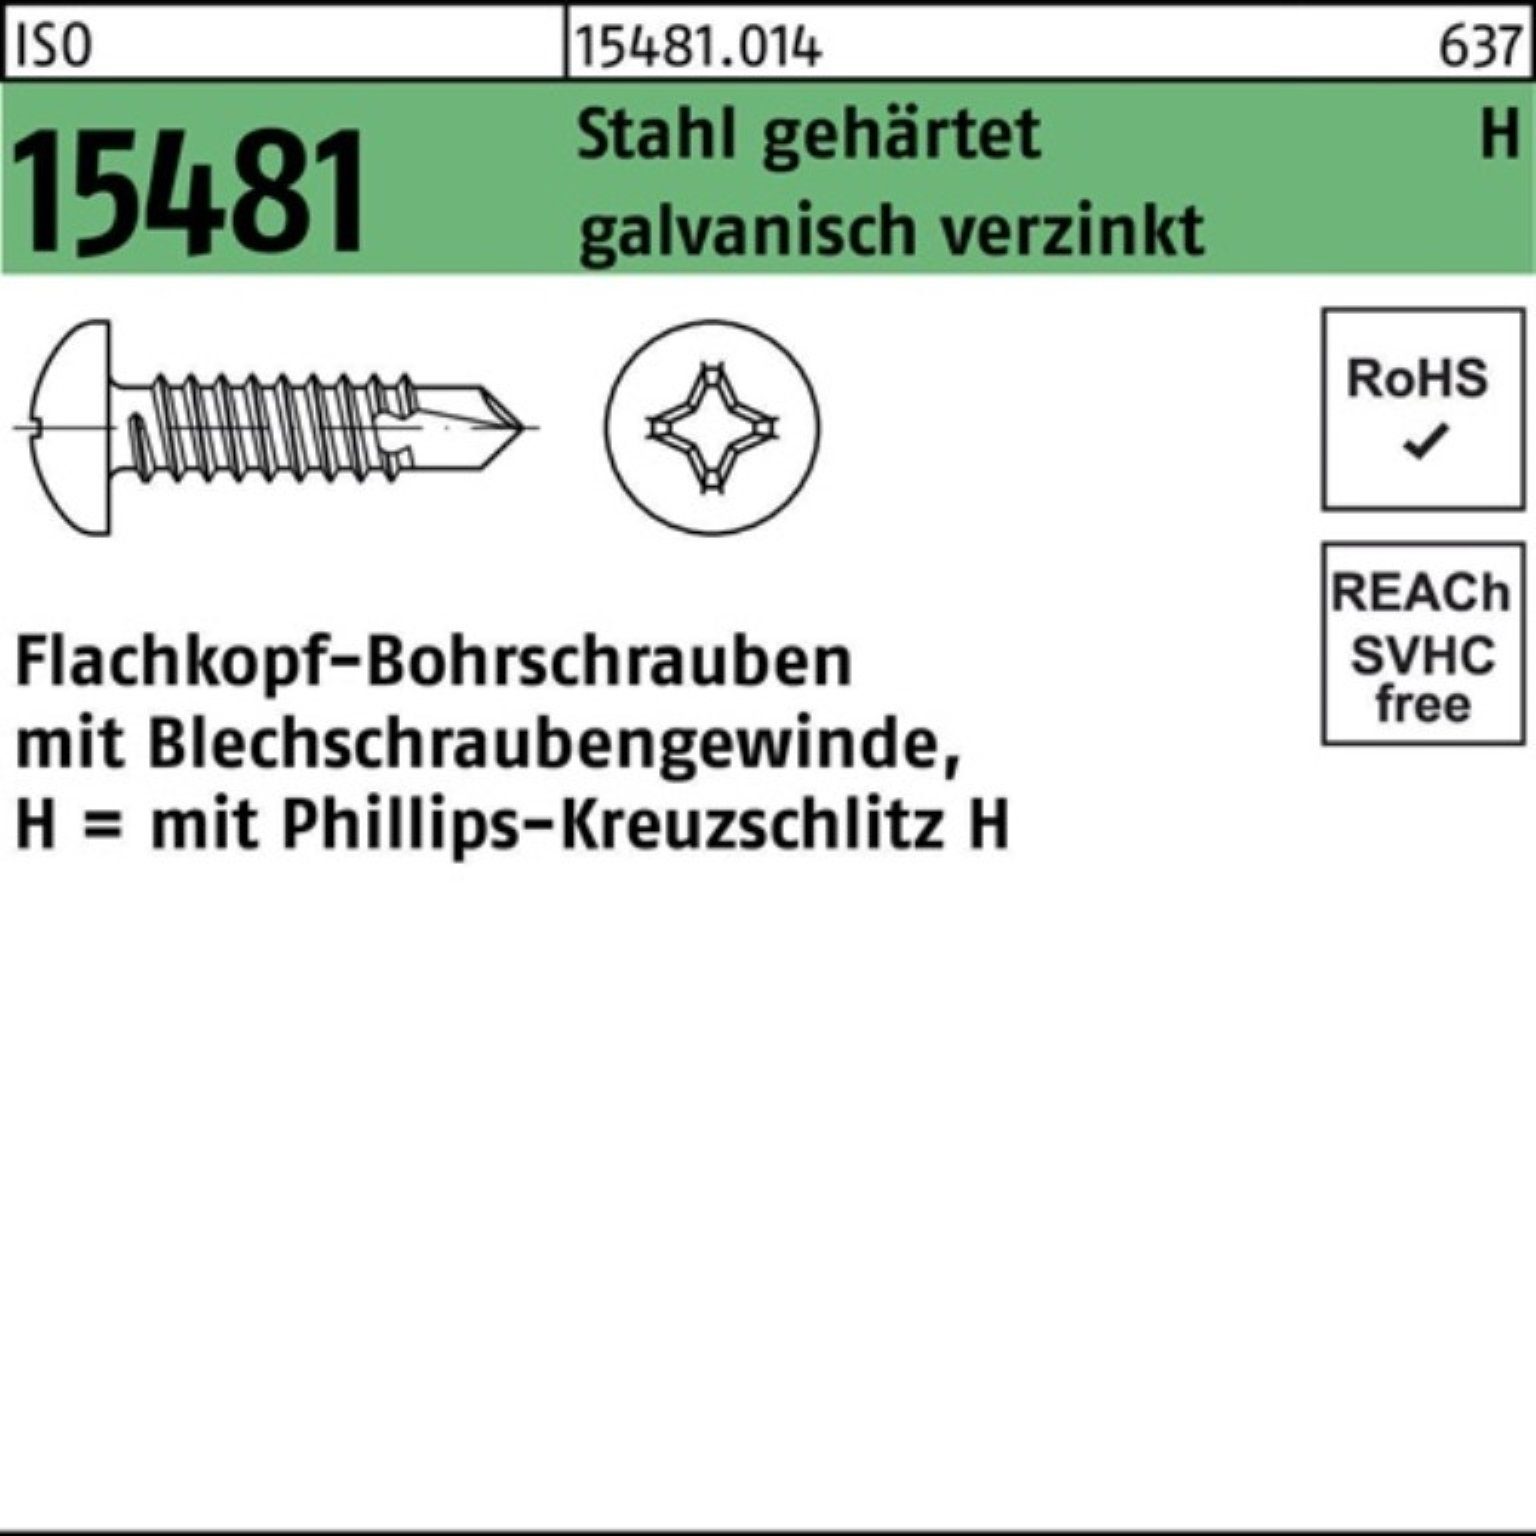 FLAKObohrschraube gehärte Reyher 15481 Bohrschraube 1000er PH 3,9x9,5-H Stahl ISO ST Pack